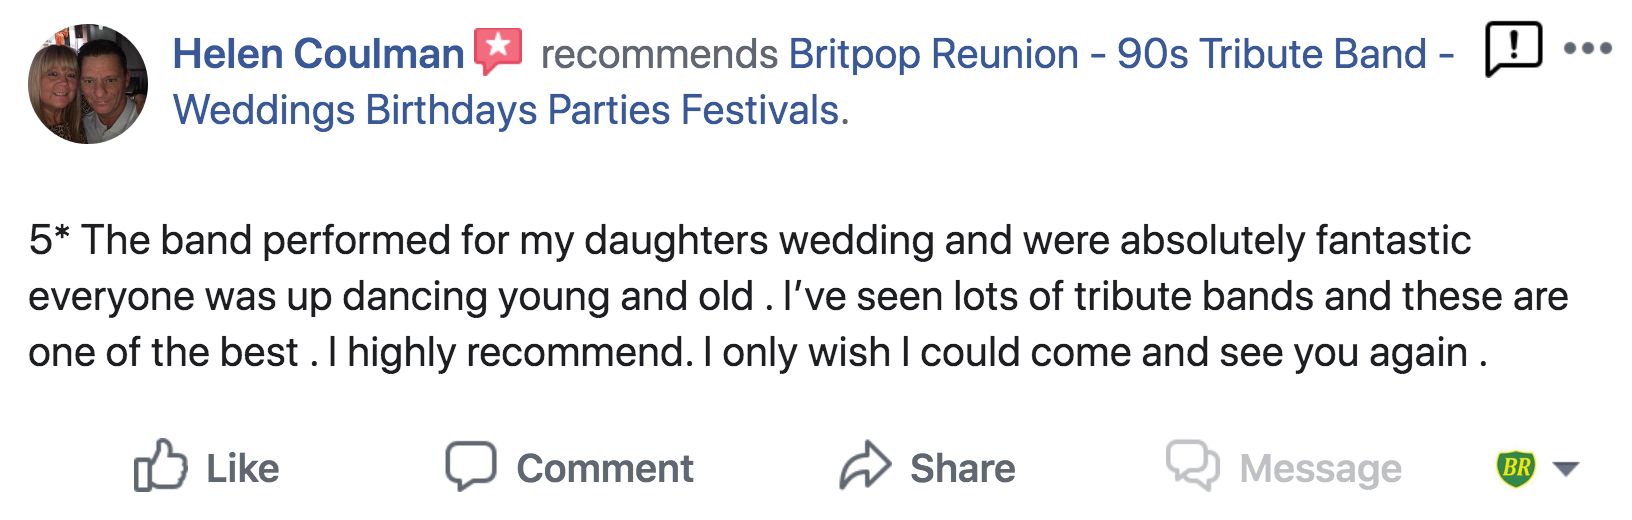 Brit pop Wedding Testimonial